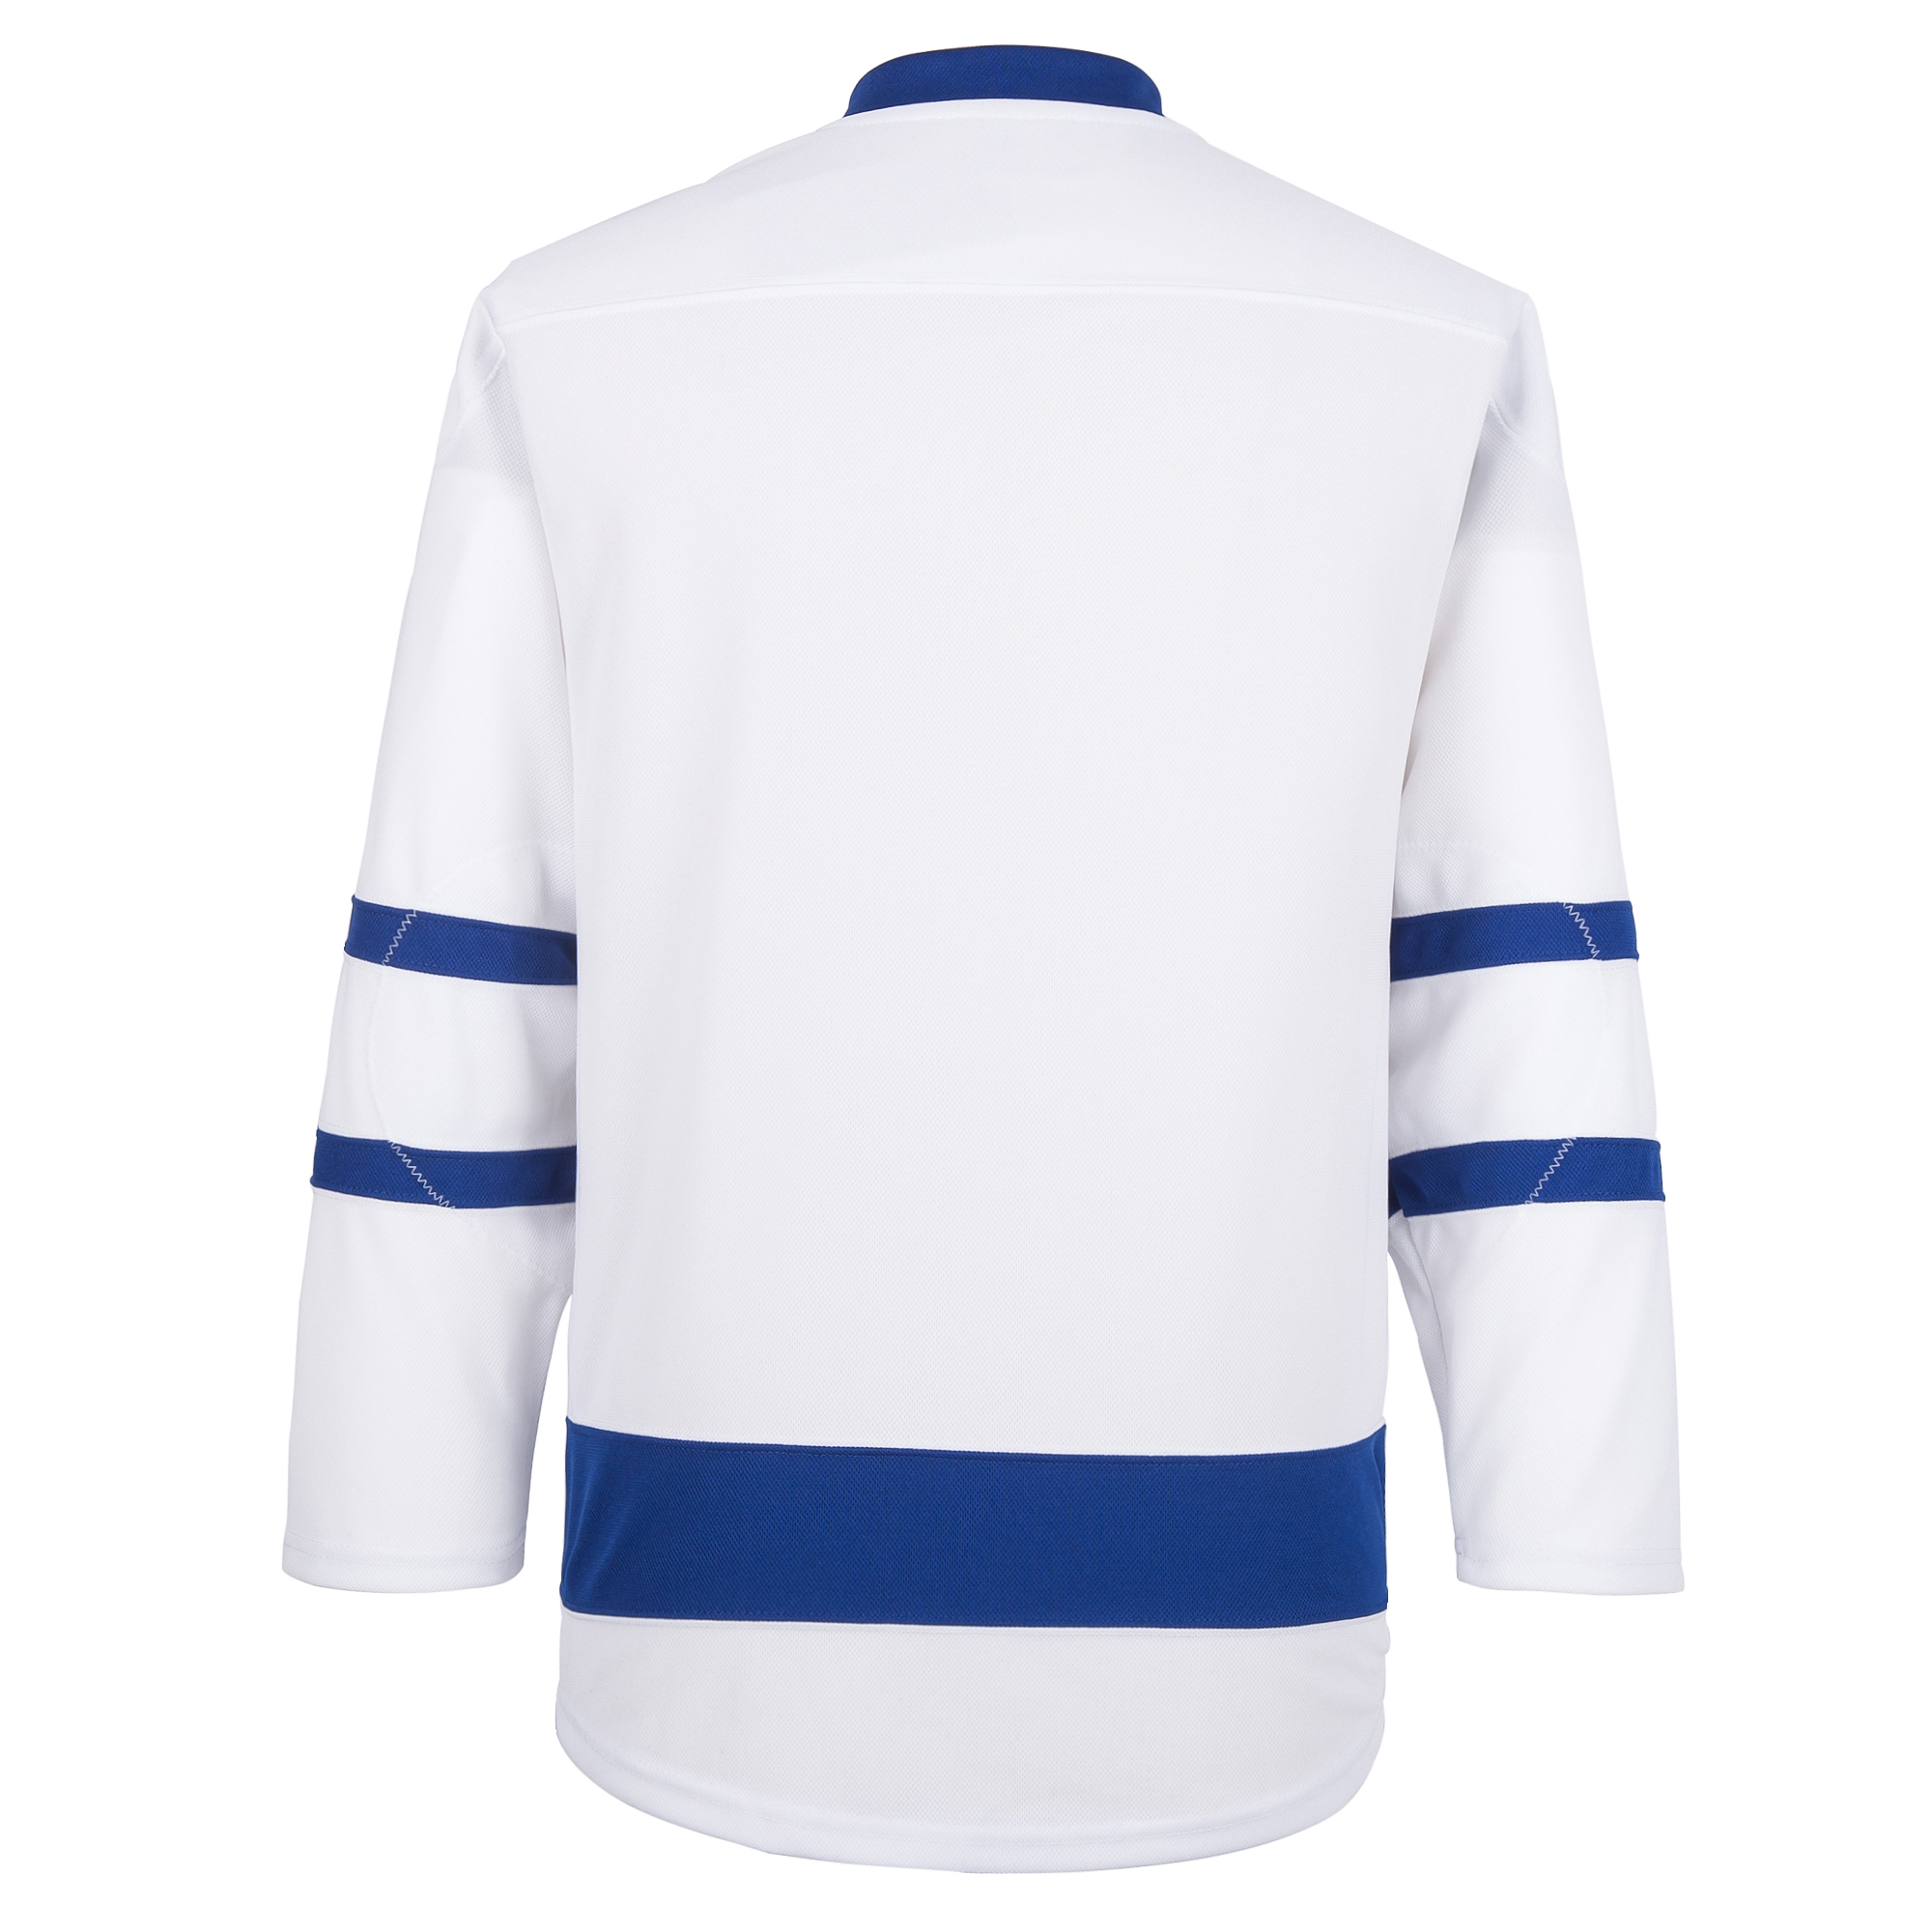 H900-E072 White Blank hockey Practice Jerseys